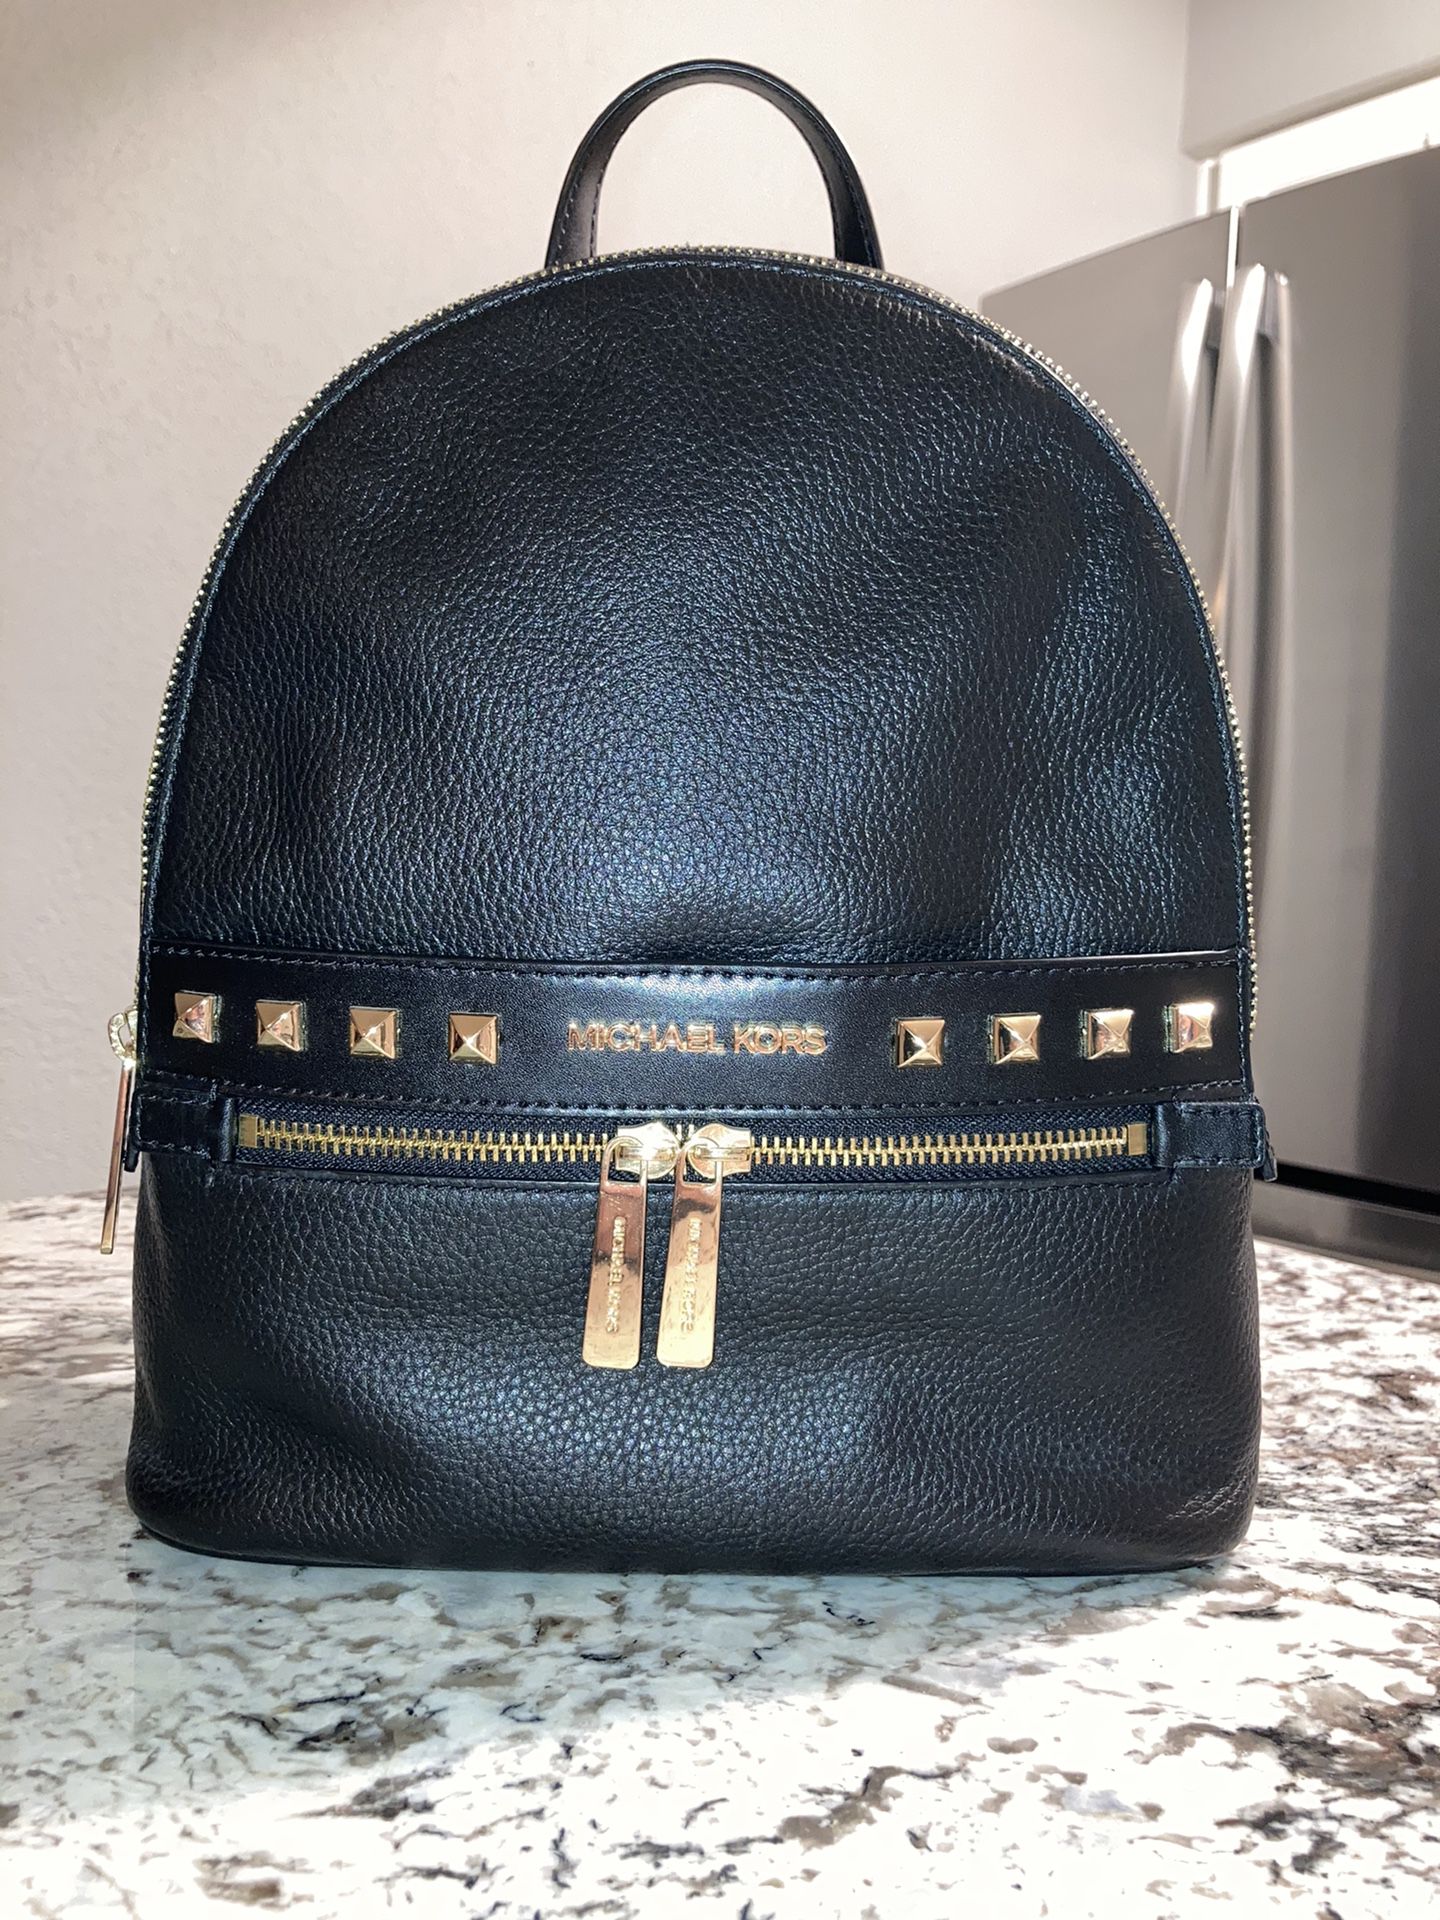 Michael Kors Kenly Medium Black Backpack for Sale in Phoenix, AZ - OfferUp